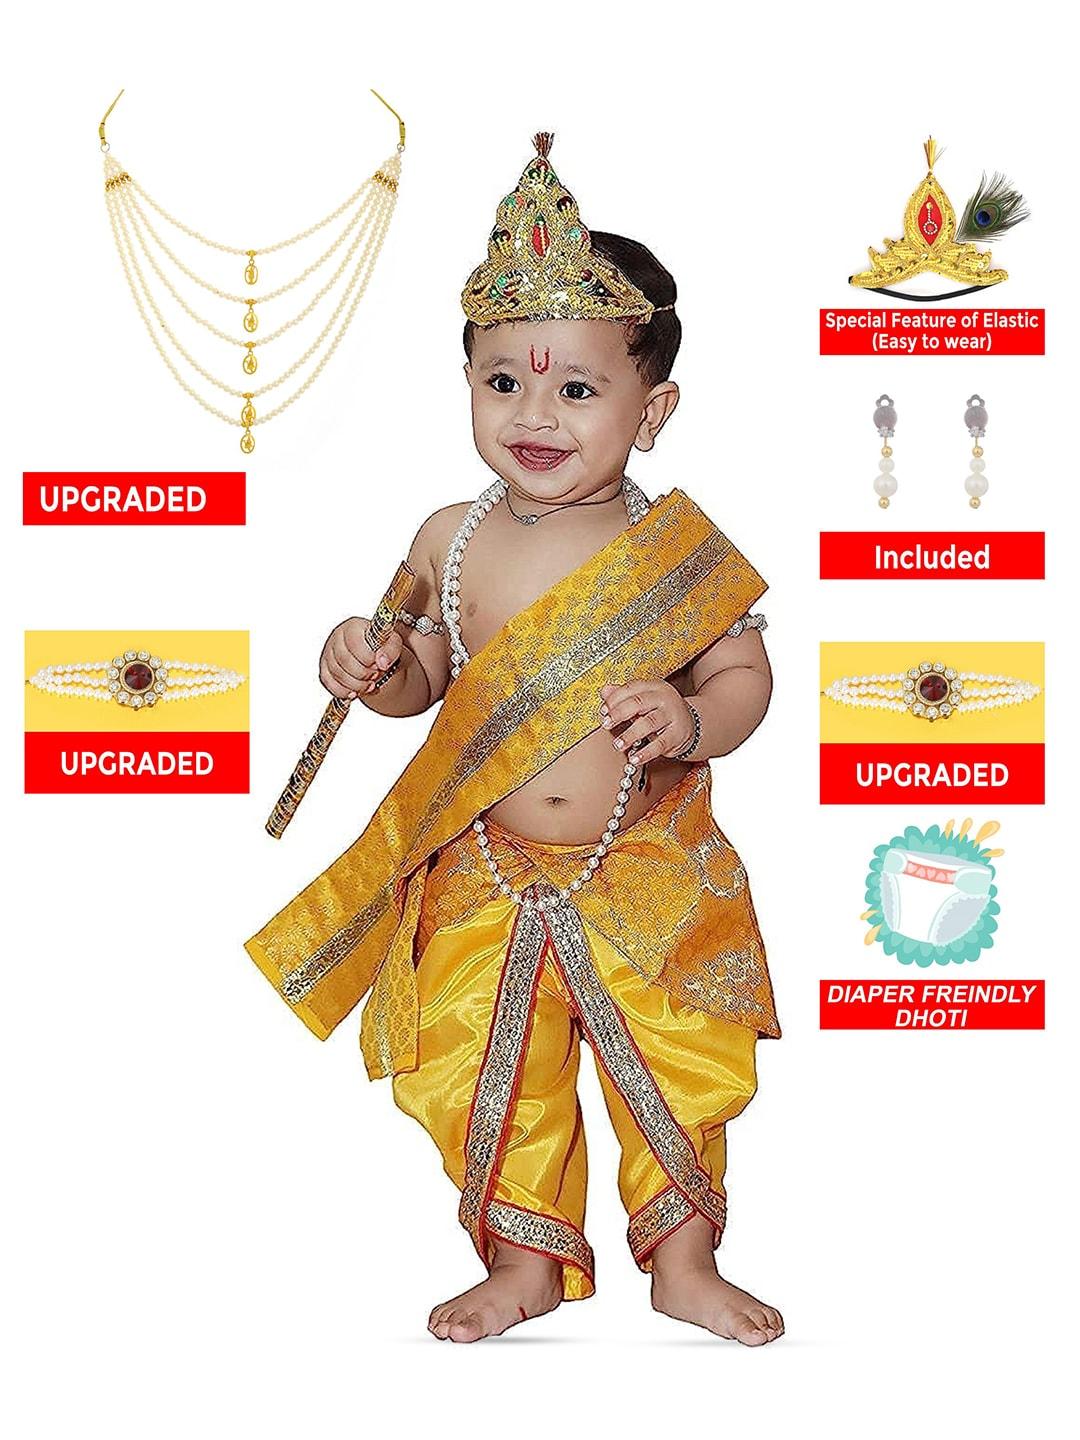 RAJ FANCY DRESSES Unisex Kids Krishna Costume Ethnic Clothing Set